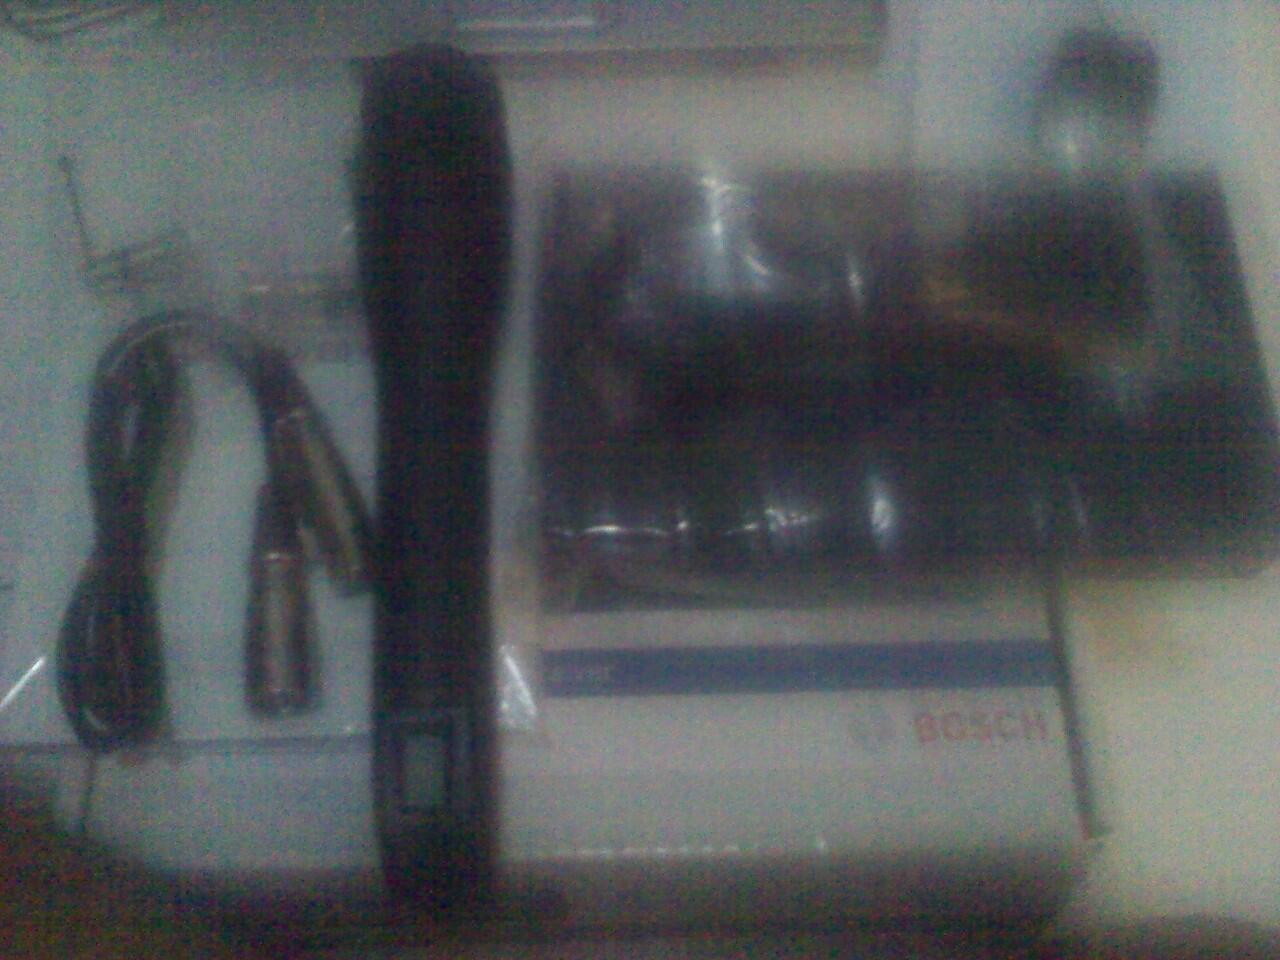 Microphone wireless Bosch